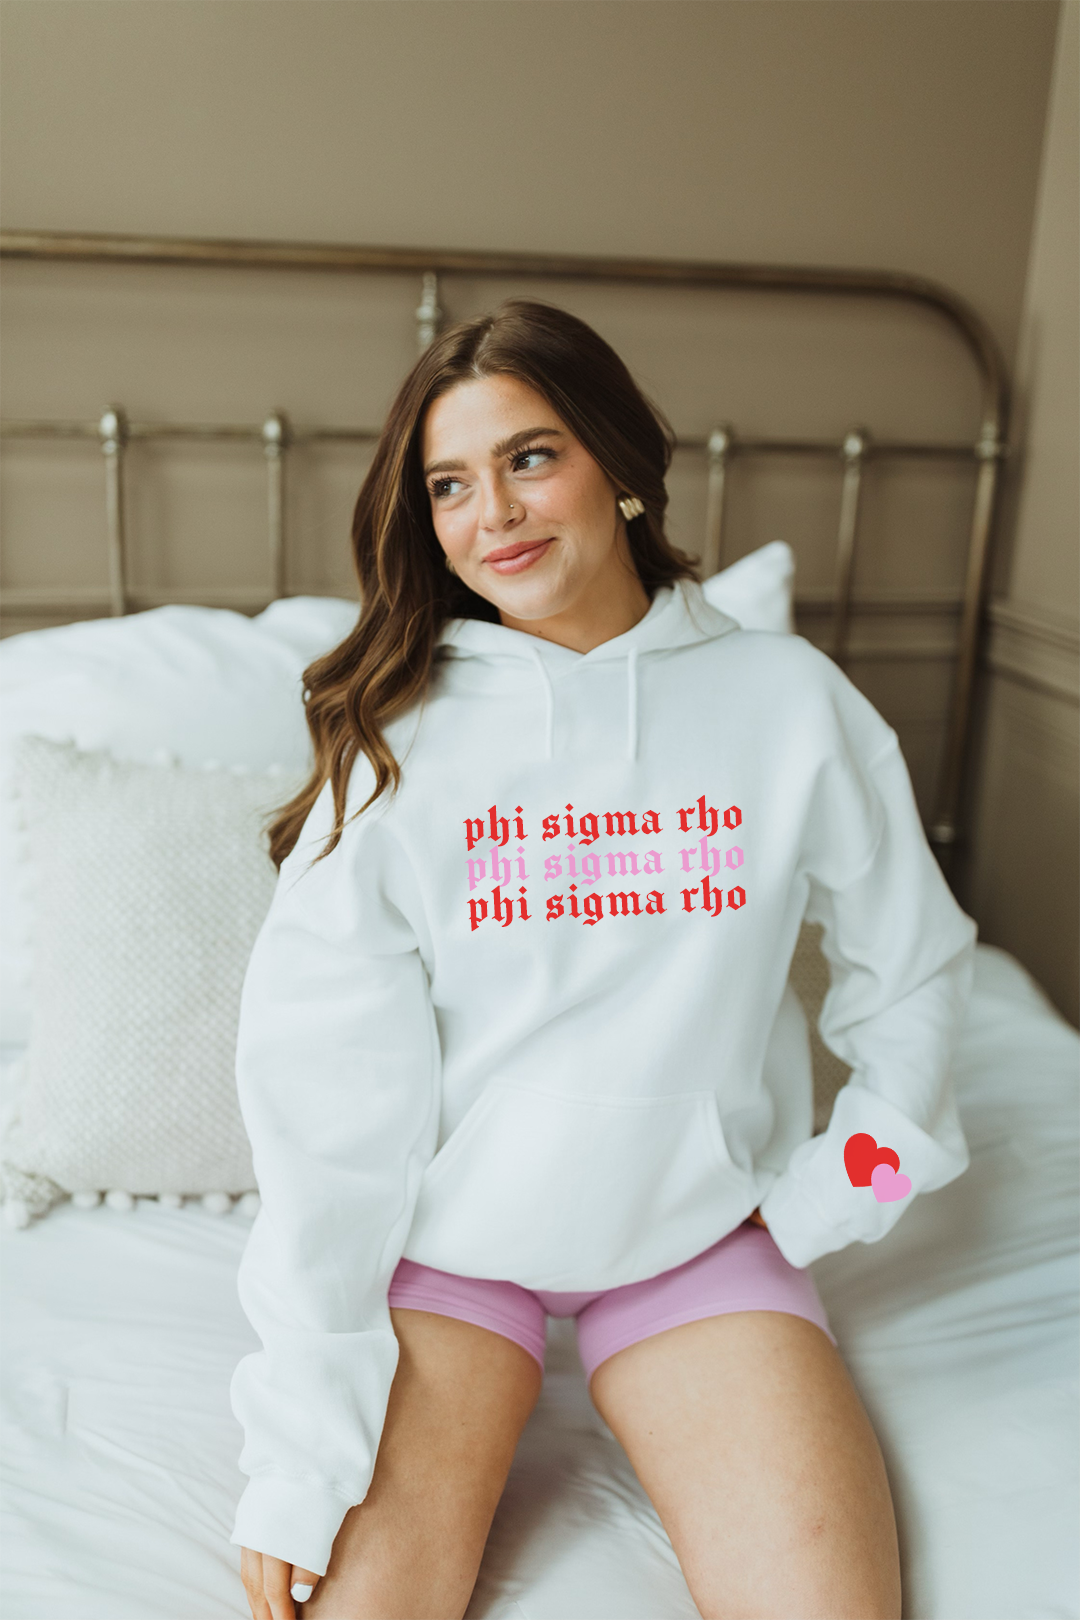 Heart Sleeve hoodie - Phi Sigma Rho